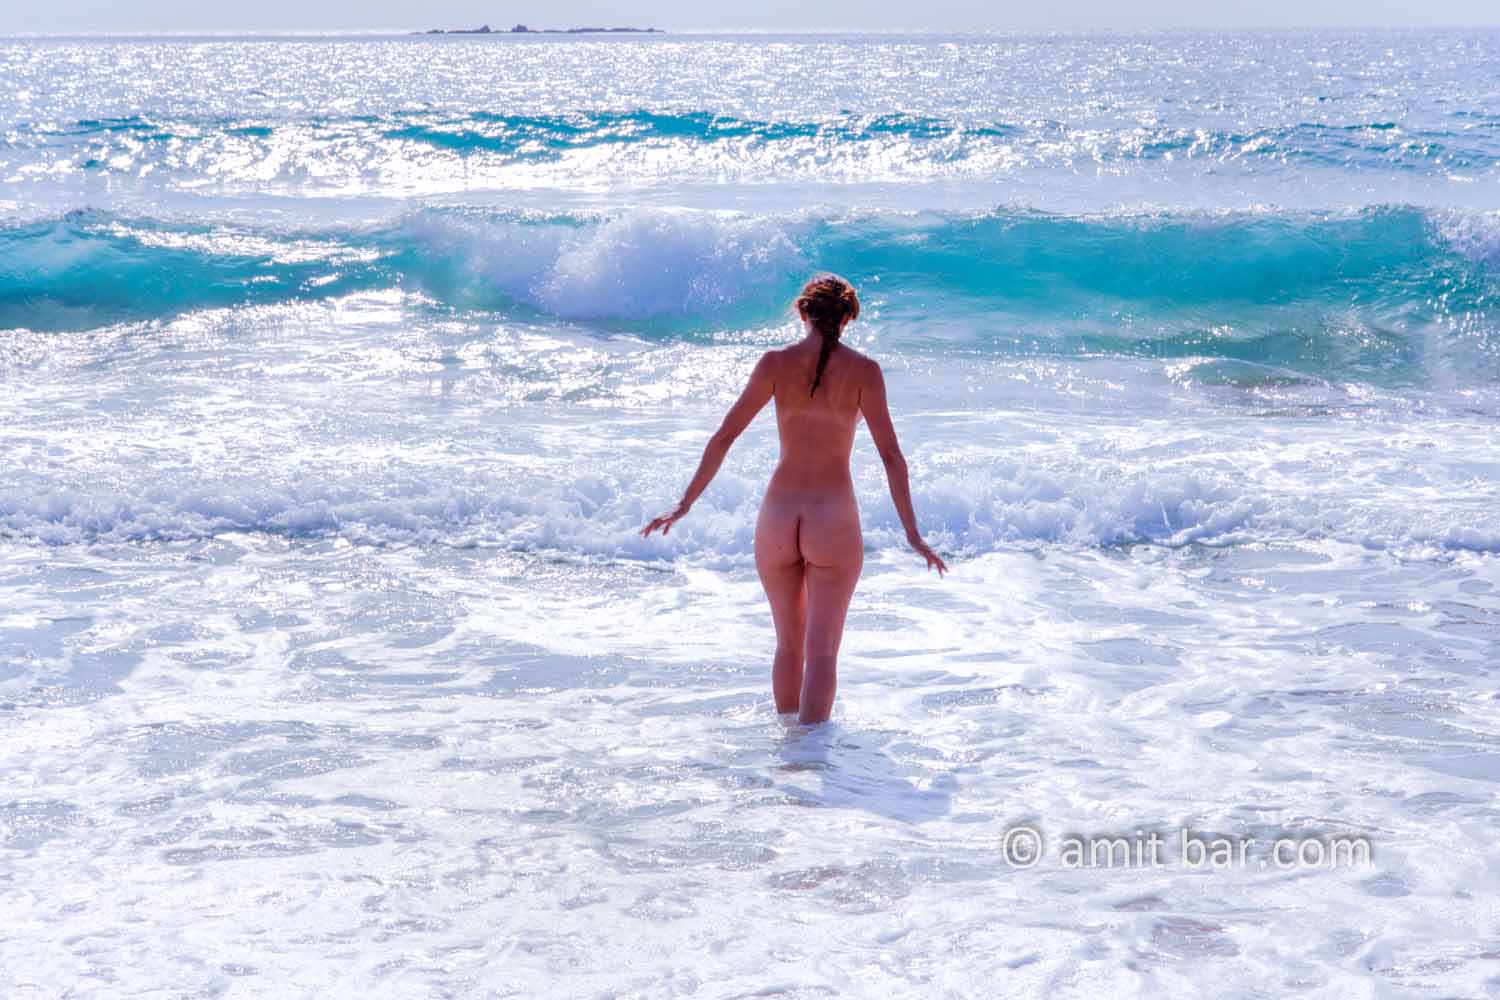 Betset I: Nude model in the sea beside Betset, Israel